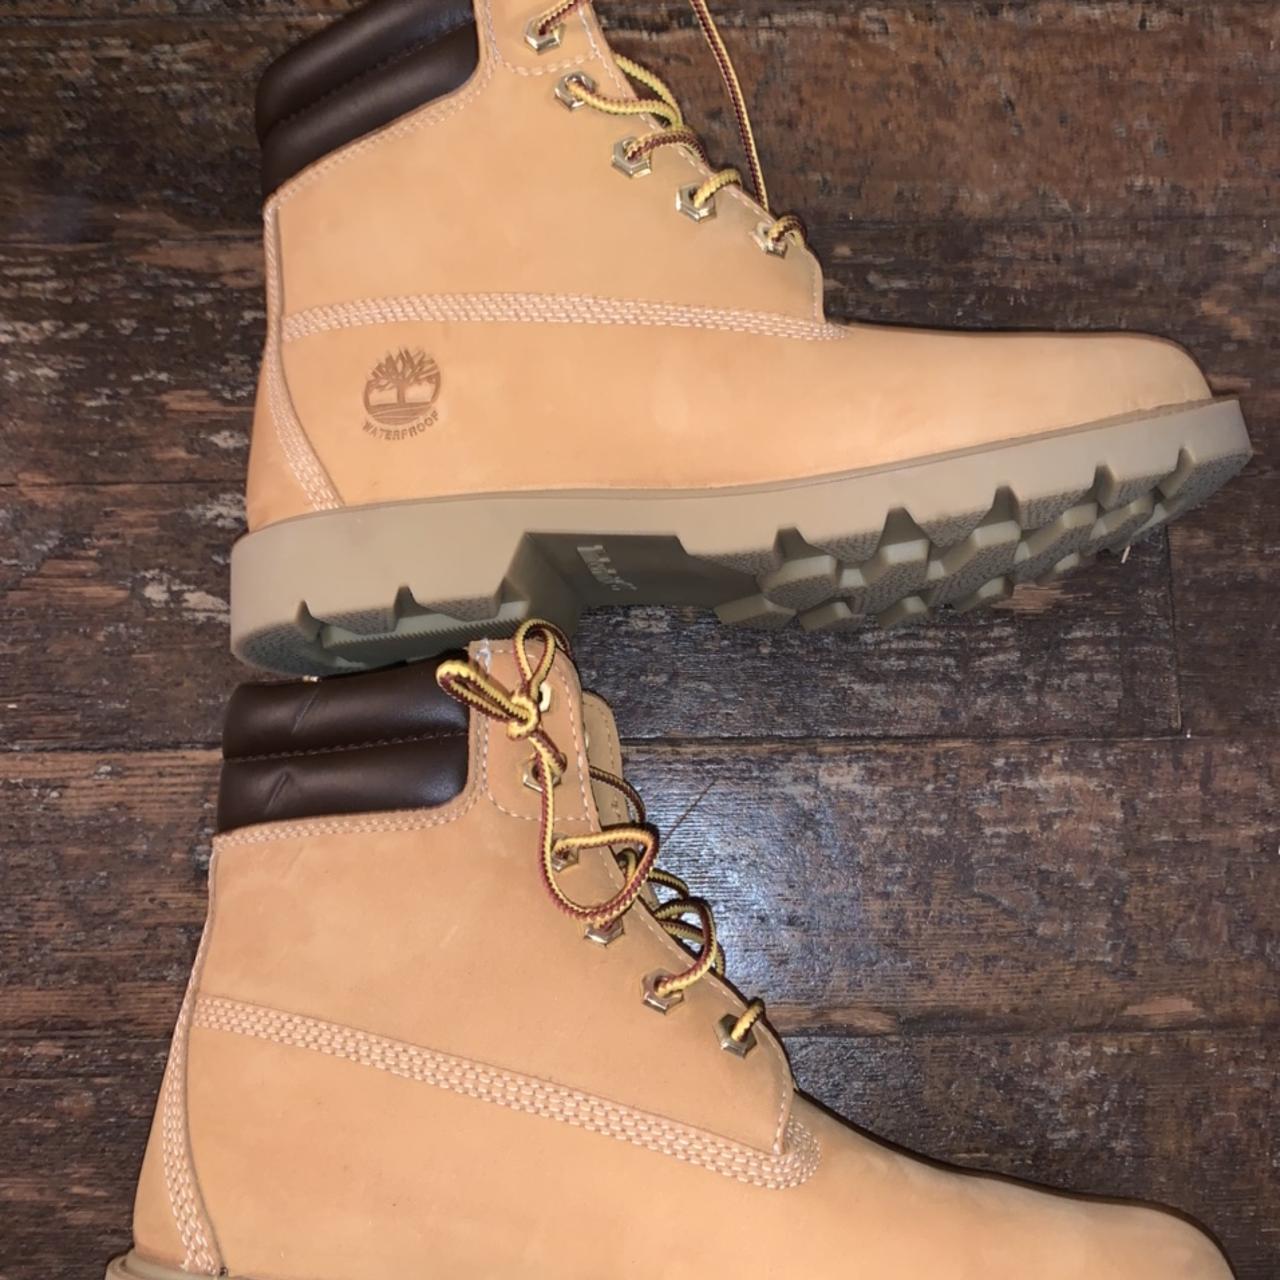 Timberland Men's Boots (4)